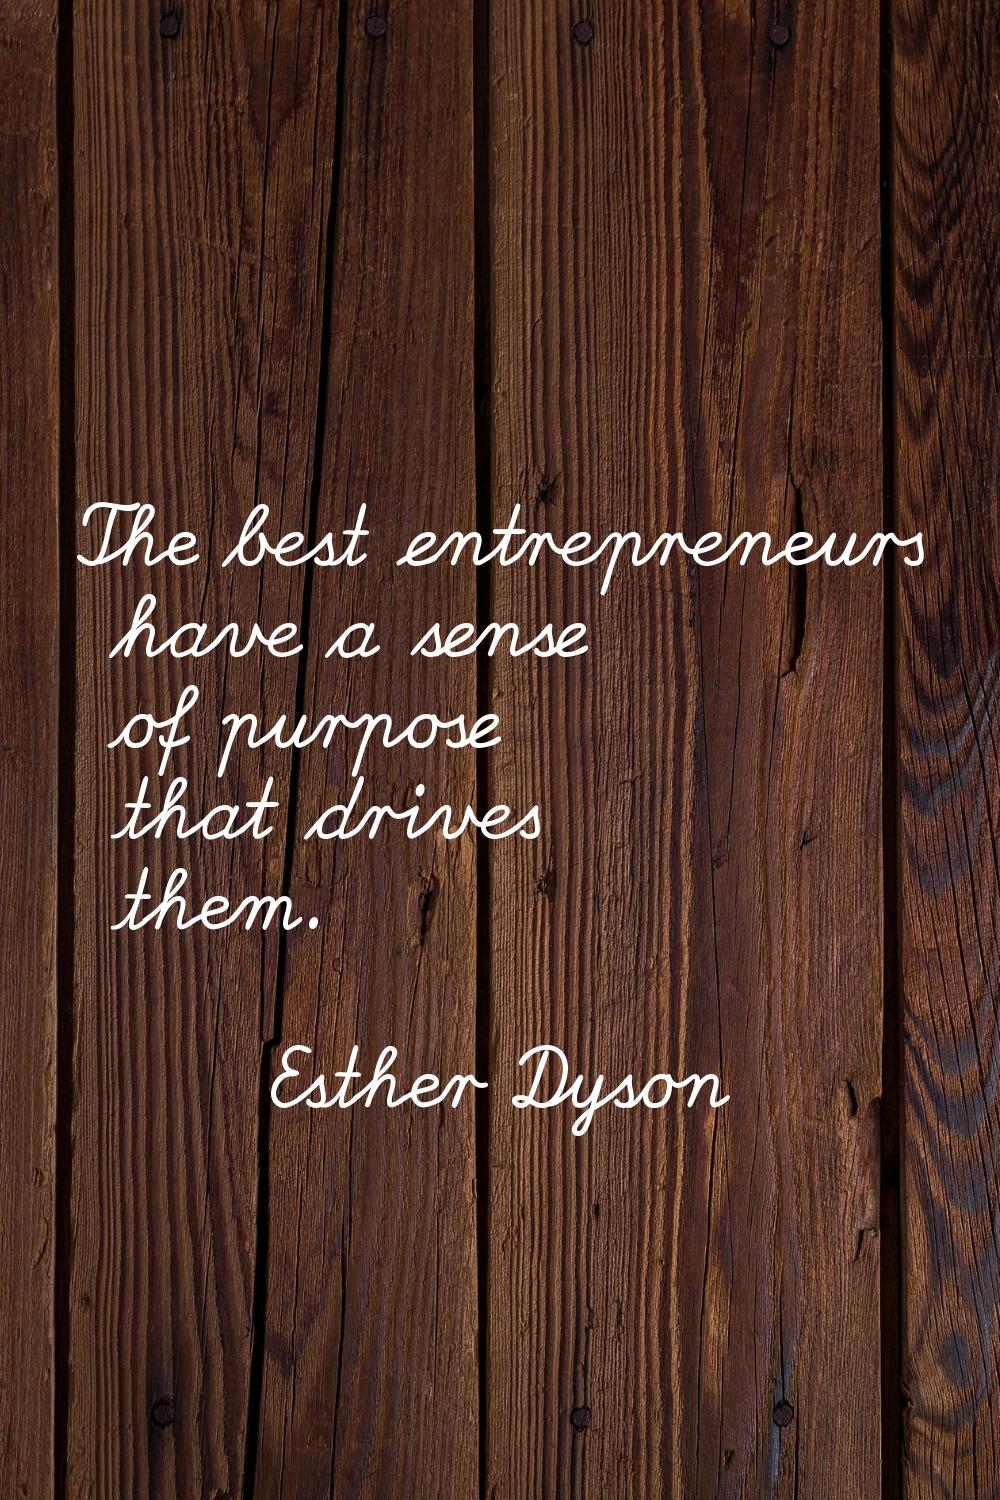 The best entrepreneurs have a sense of purpose that drives them.